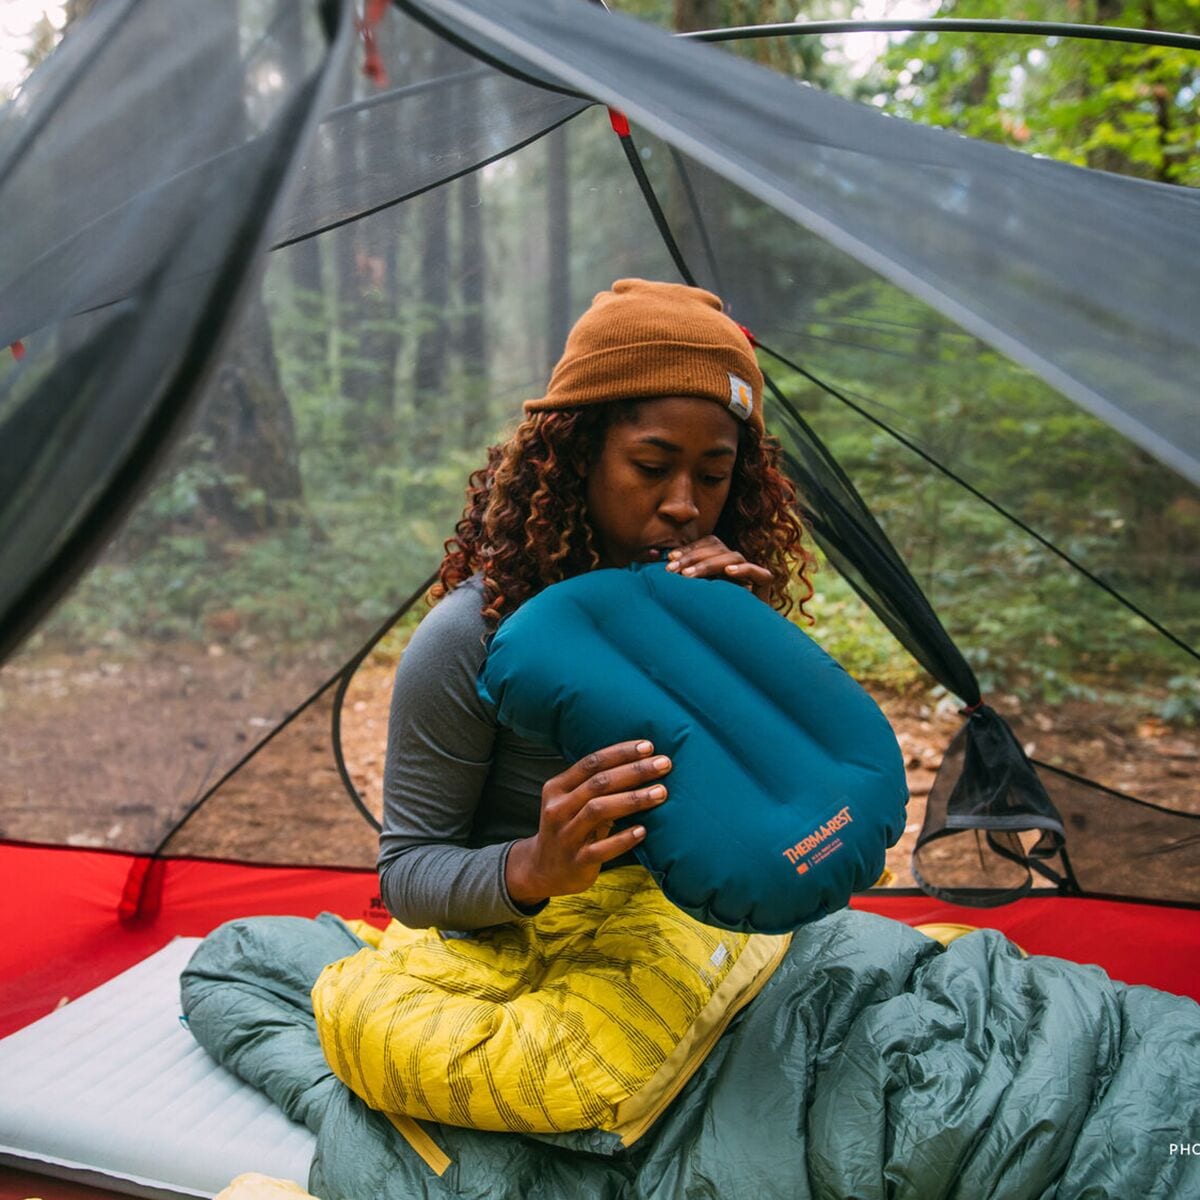  Therm-a-Rest Air Head Lite Pillow - Hike & Camp